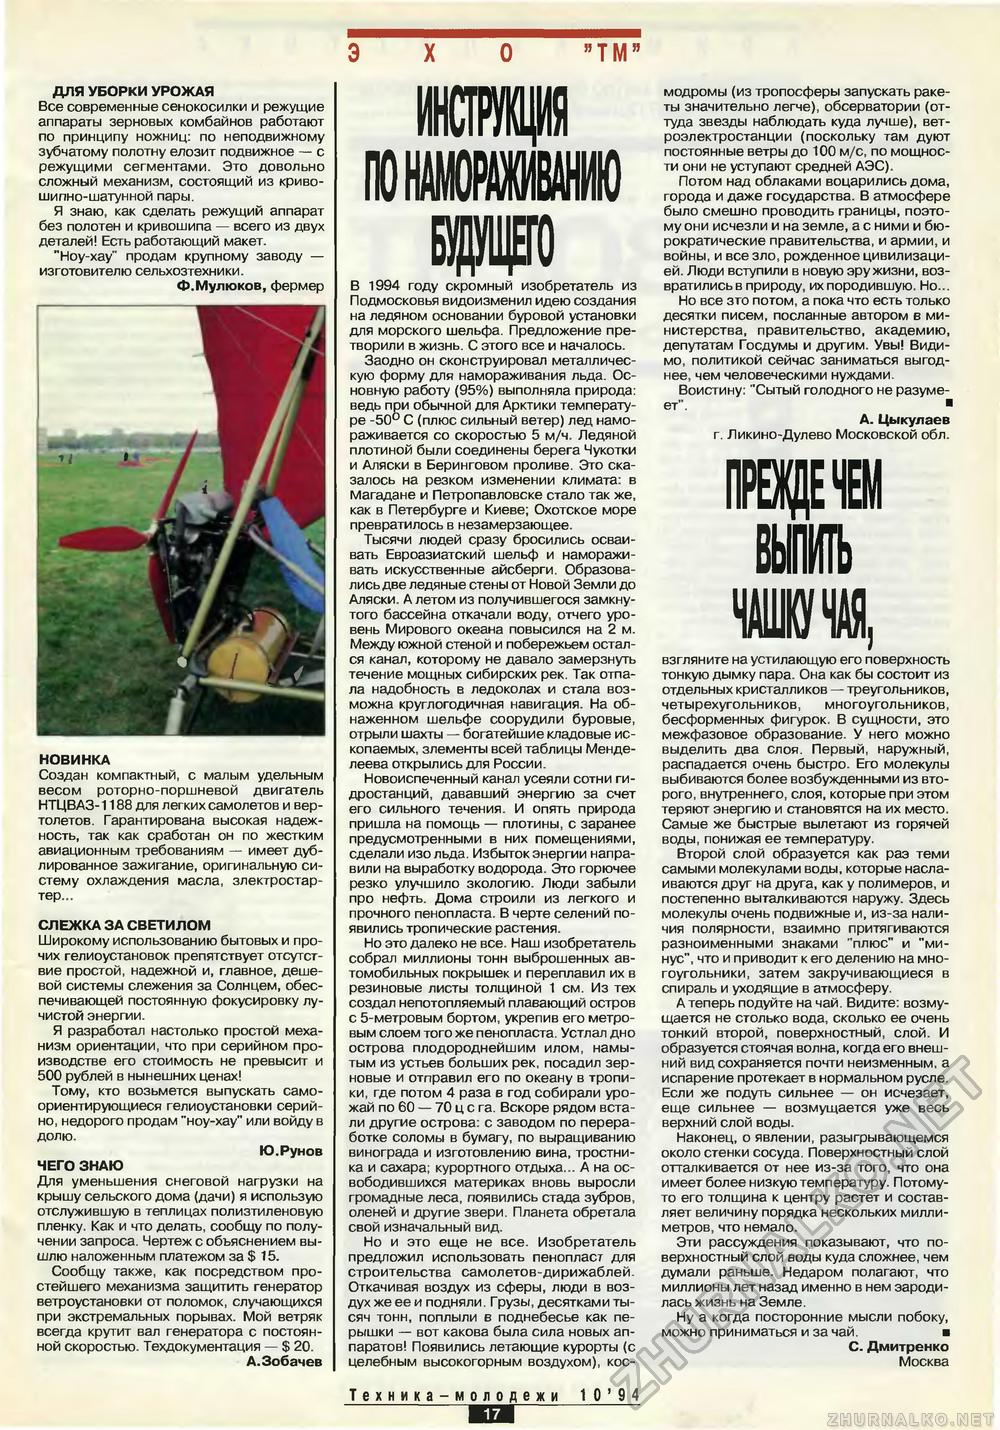 Техника - молодёжи 1994-10, страница 19